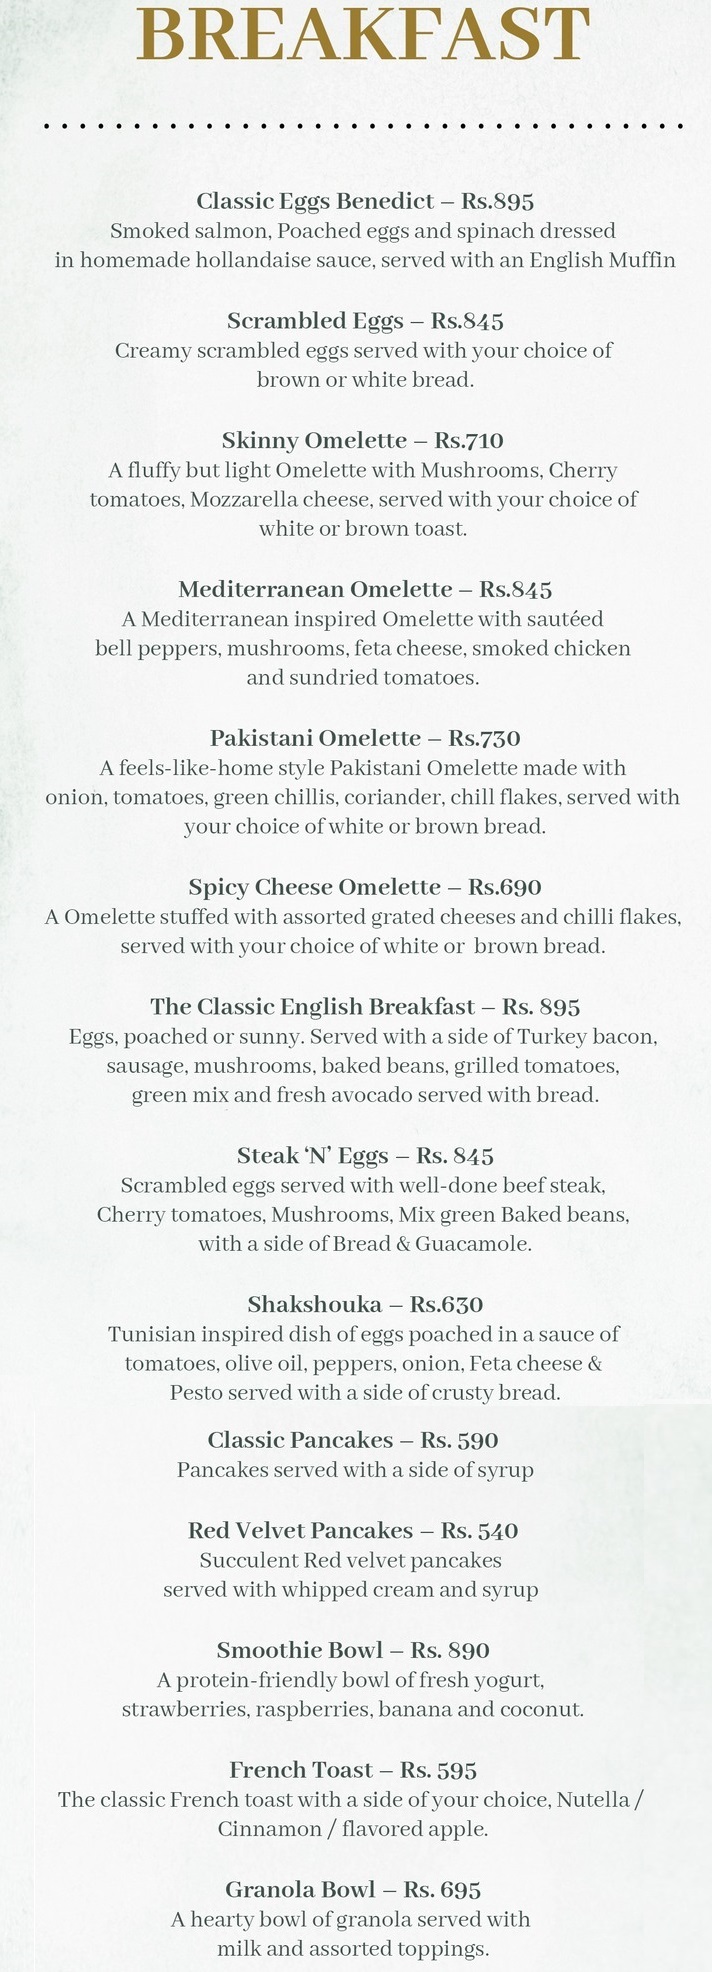 kopi restaurant menu page 2